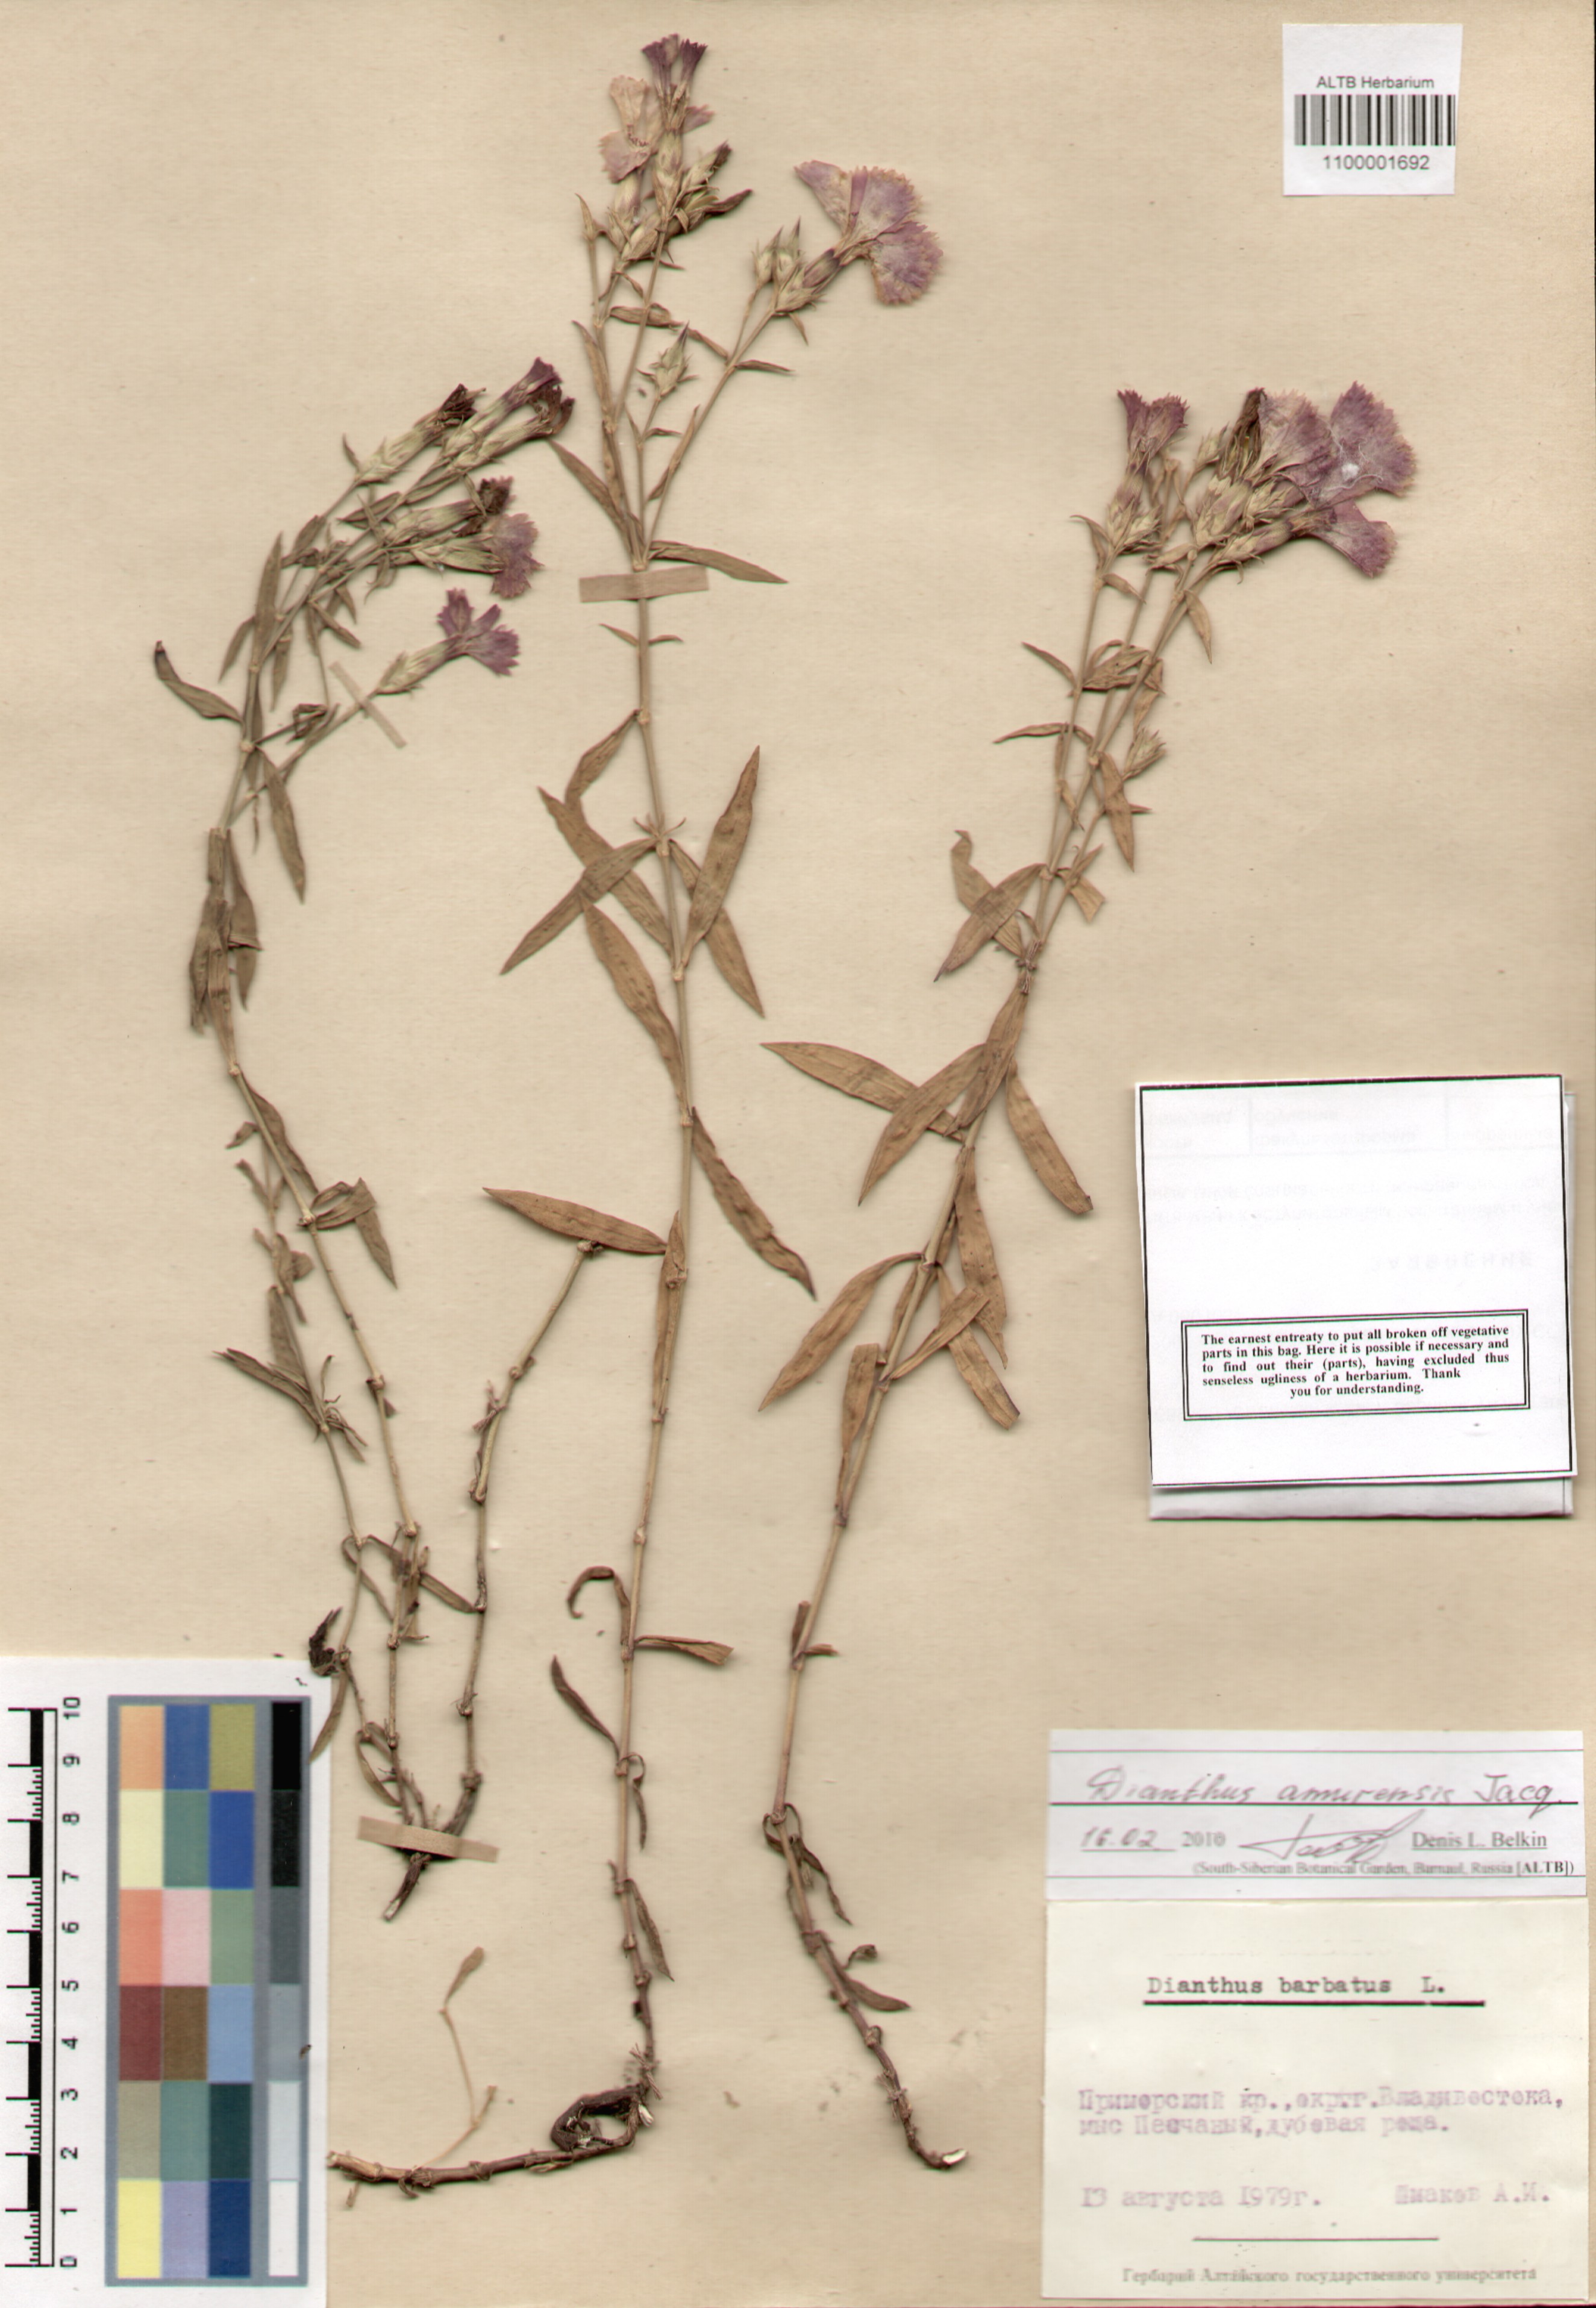 Caryophyllaceae,Dianthus amurensis Jacq.